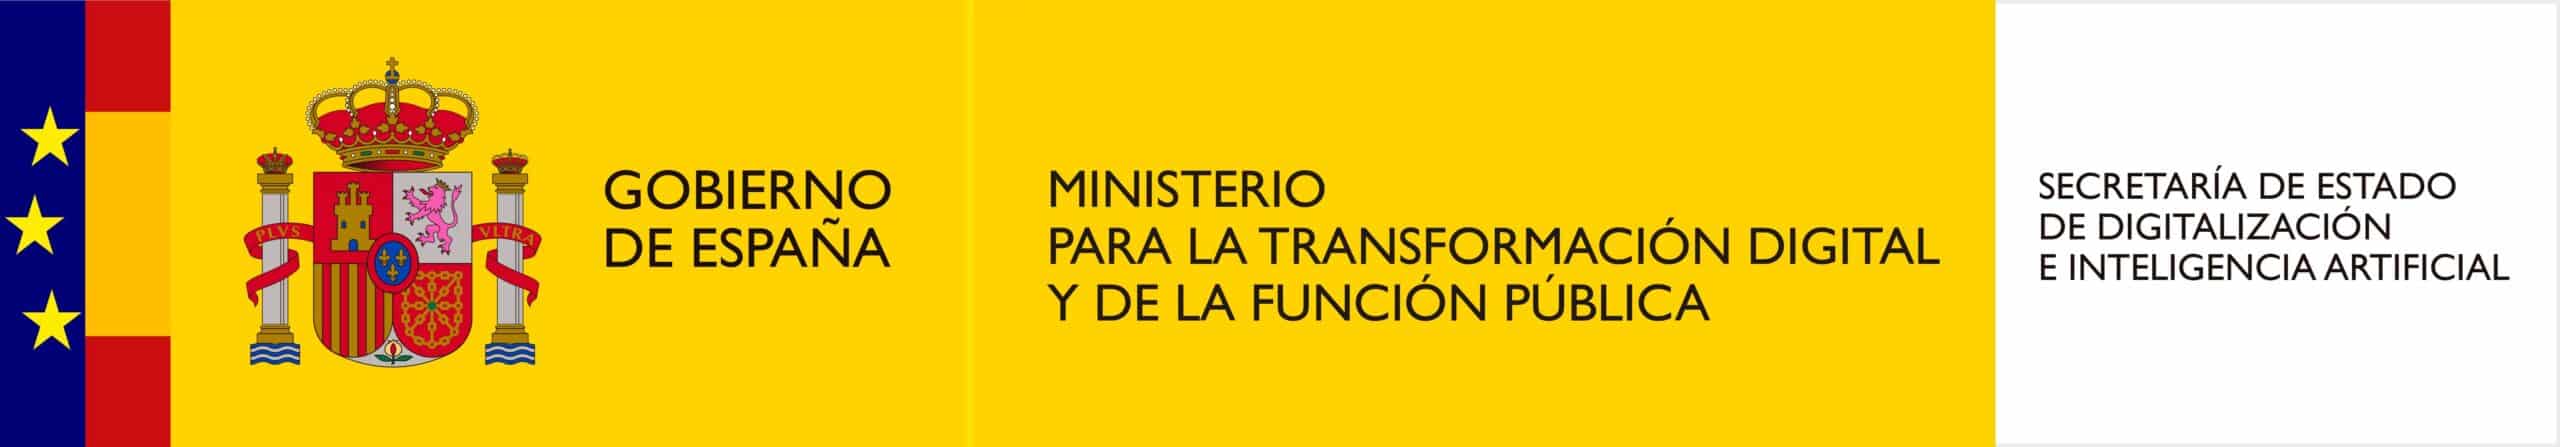 logo ministerio para la transformacion digital